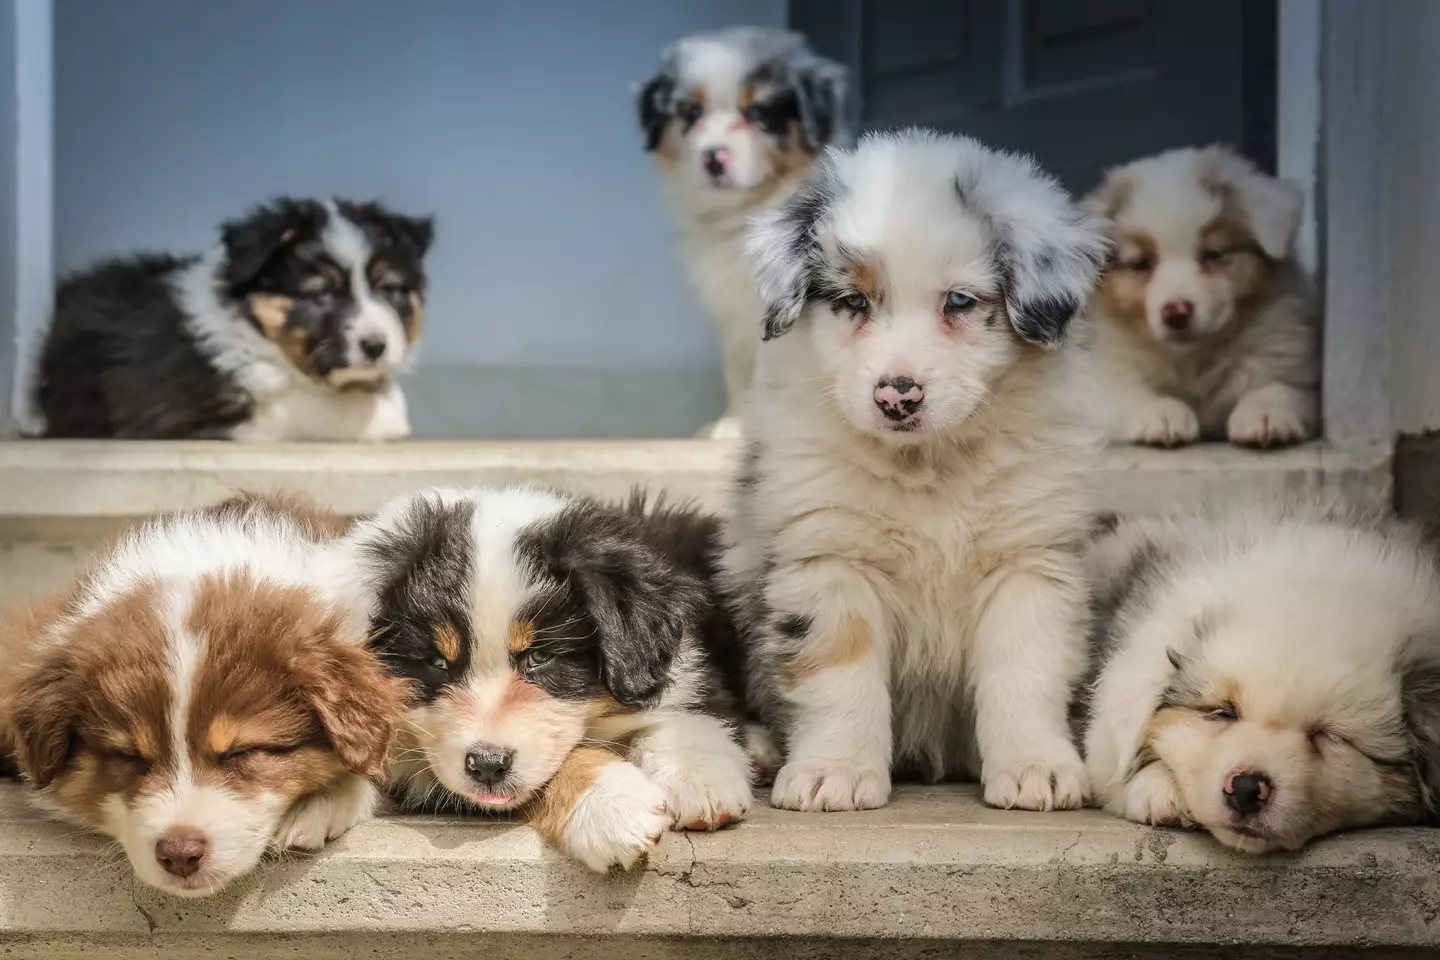 Pandemic puppies were popular in lockdown (